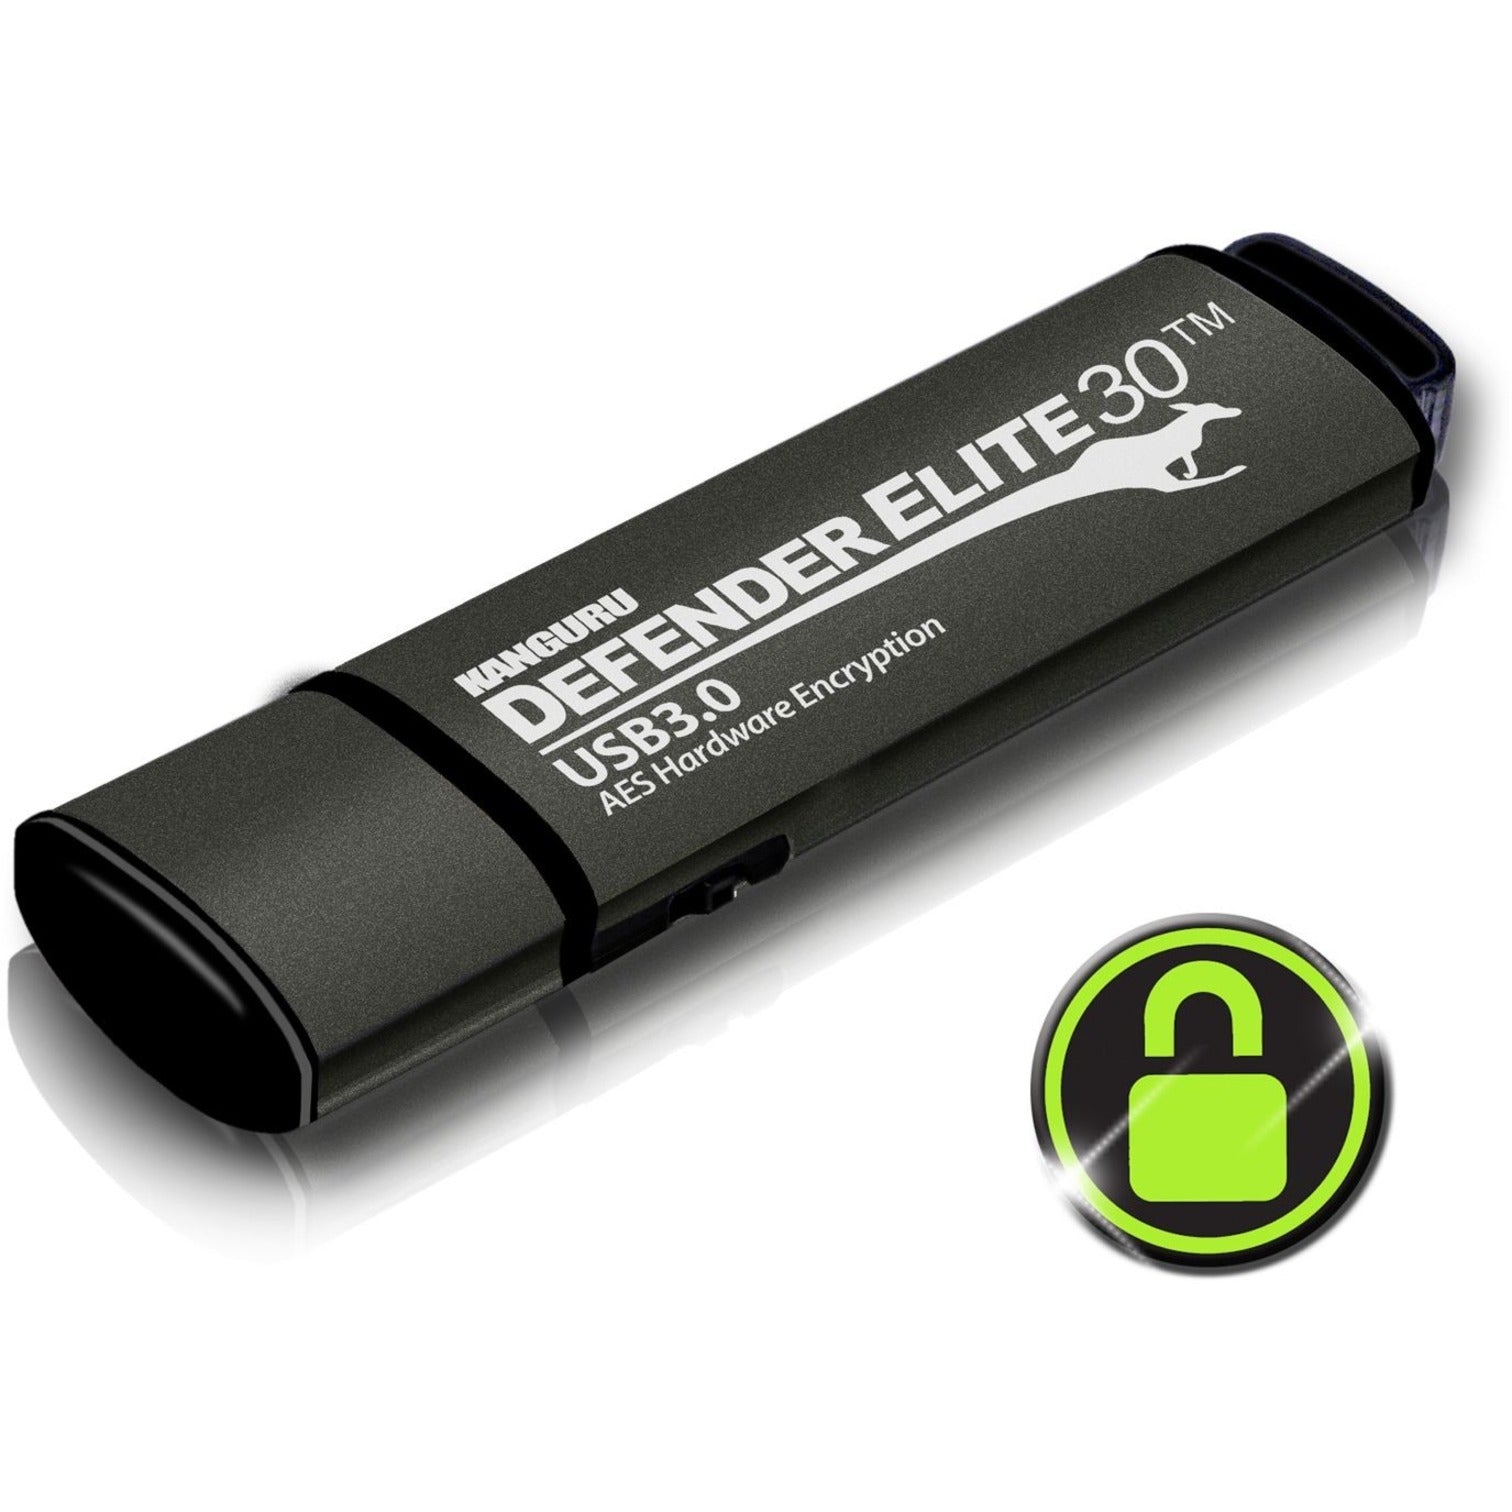 Kanguru KDFE30-128G Defender Elite30 Hardware Encrypted USB Flash Drive, 128GB, Tamper Proof, Anti-virus Protection